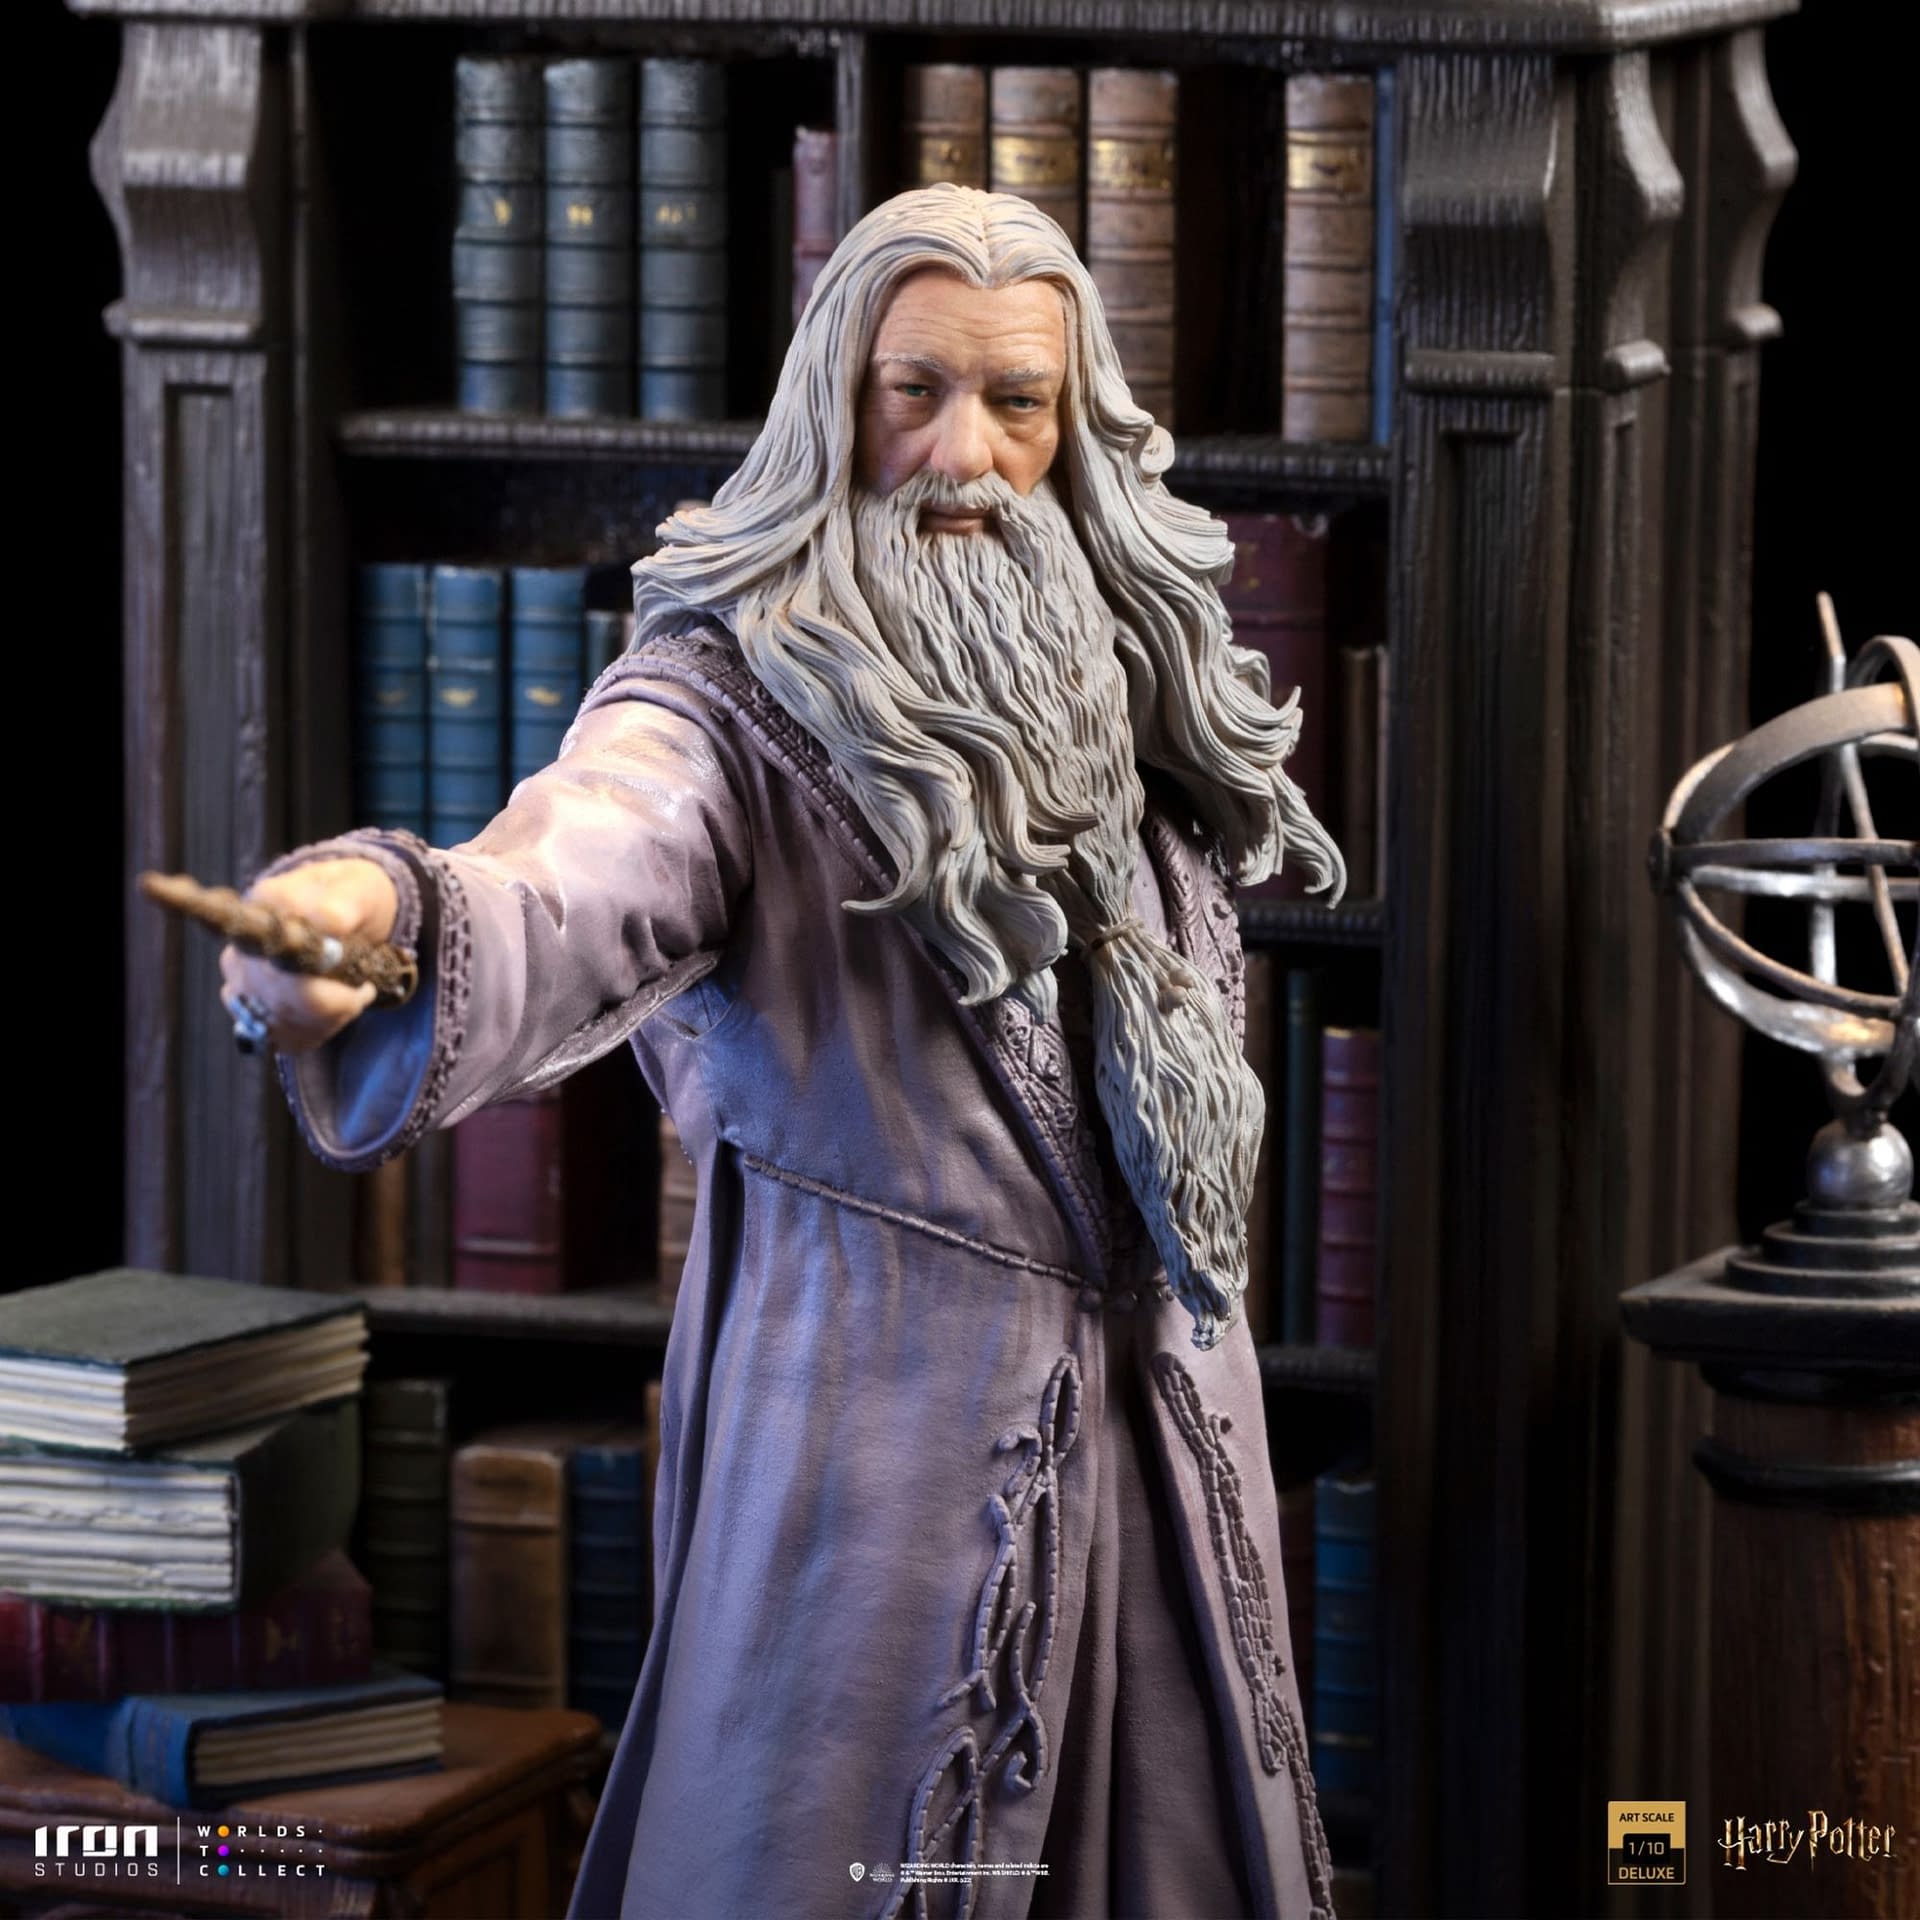 Harry Potter's Dumbledore Brings Some Magic to Iron Studios 